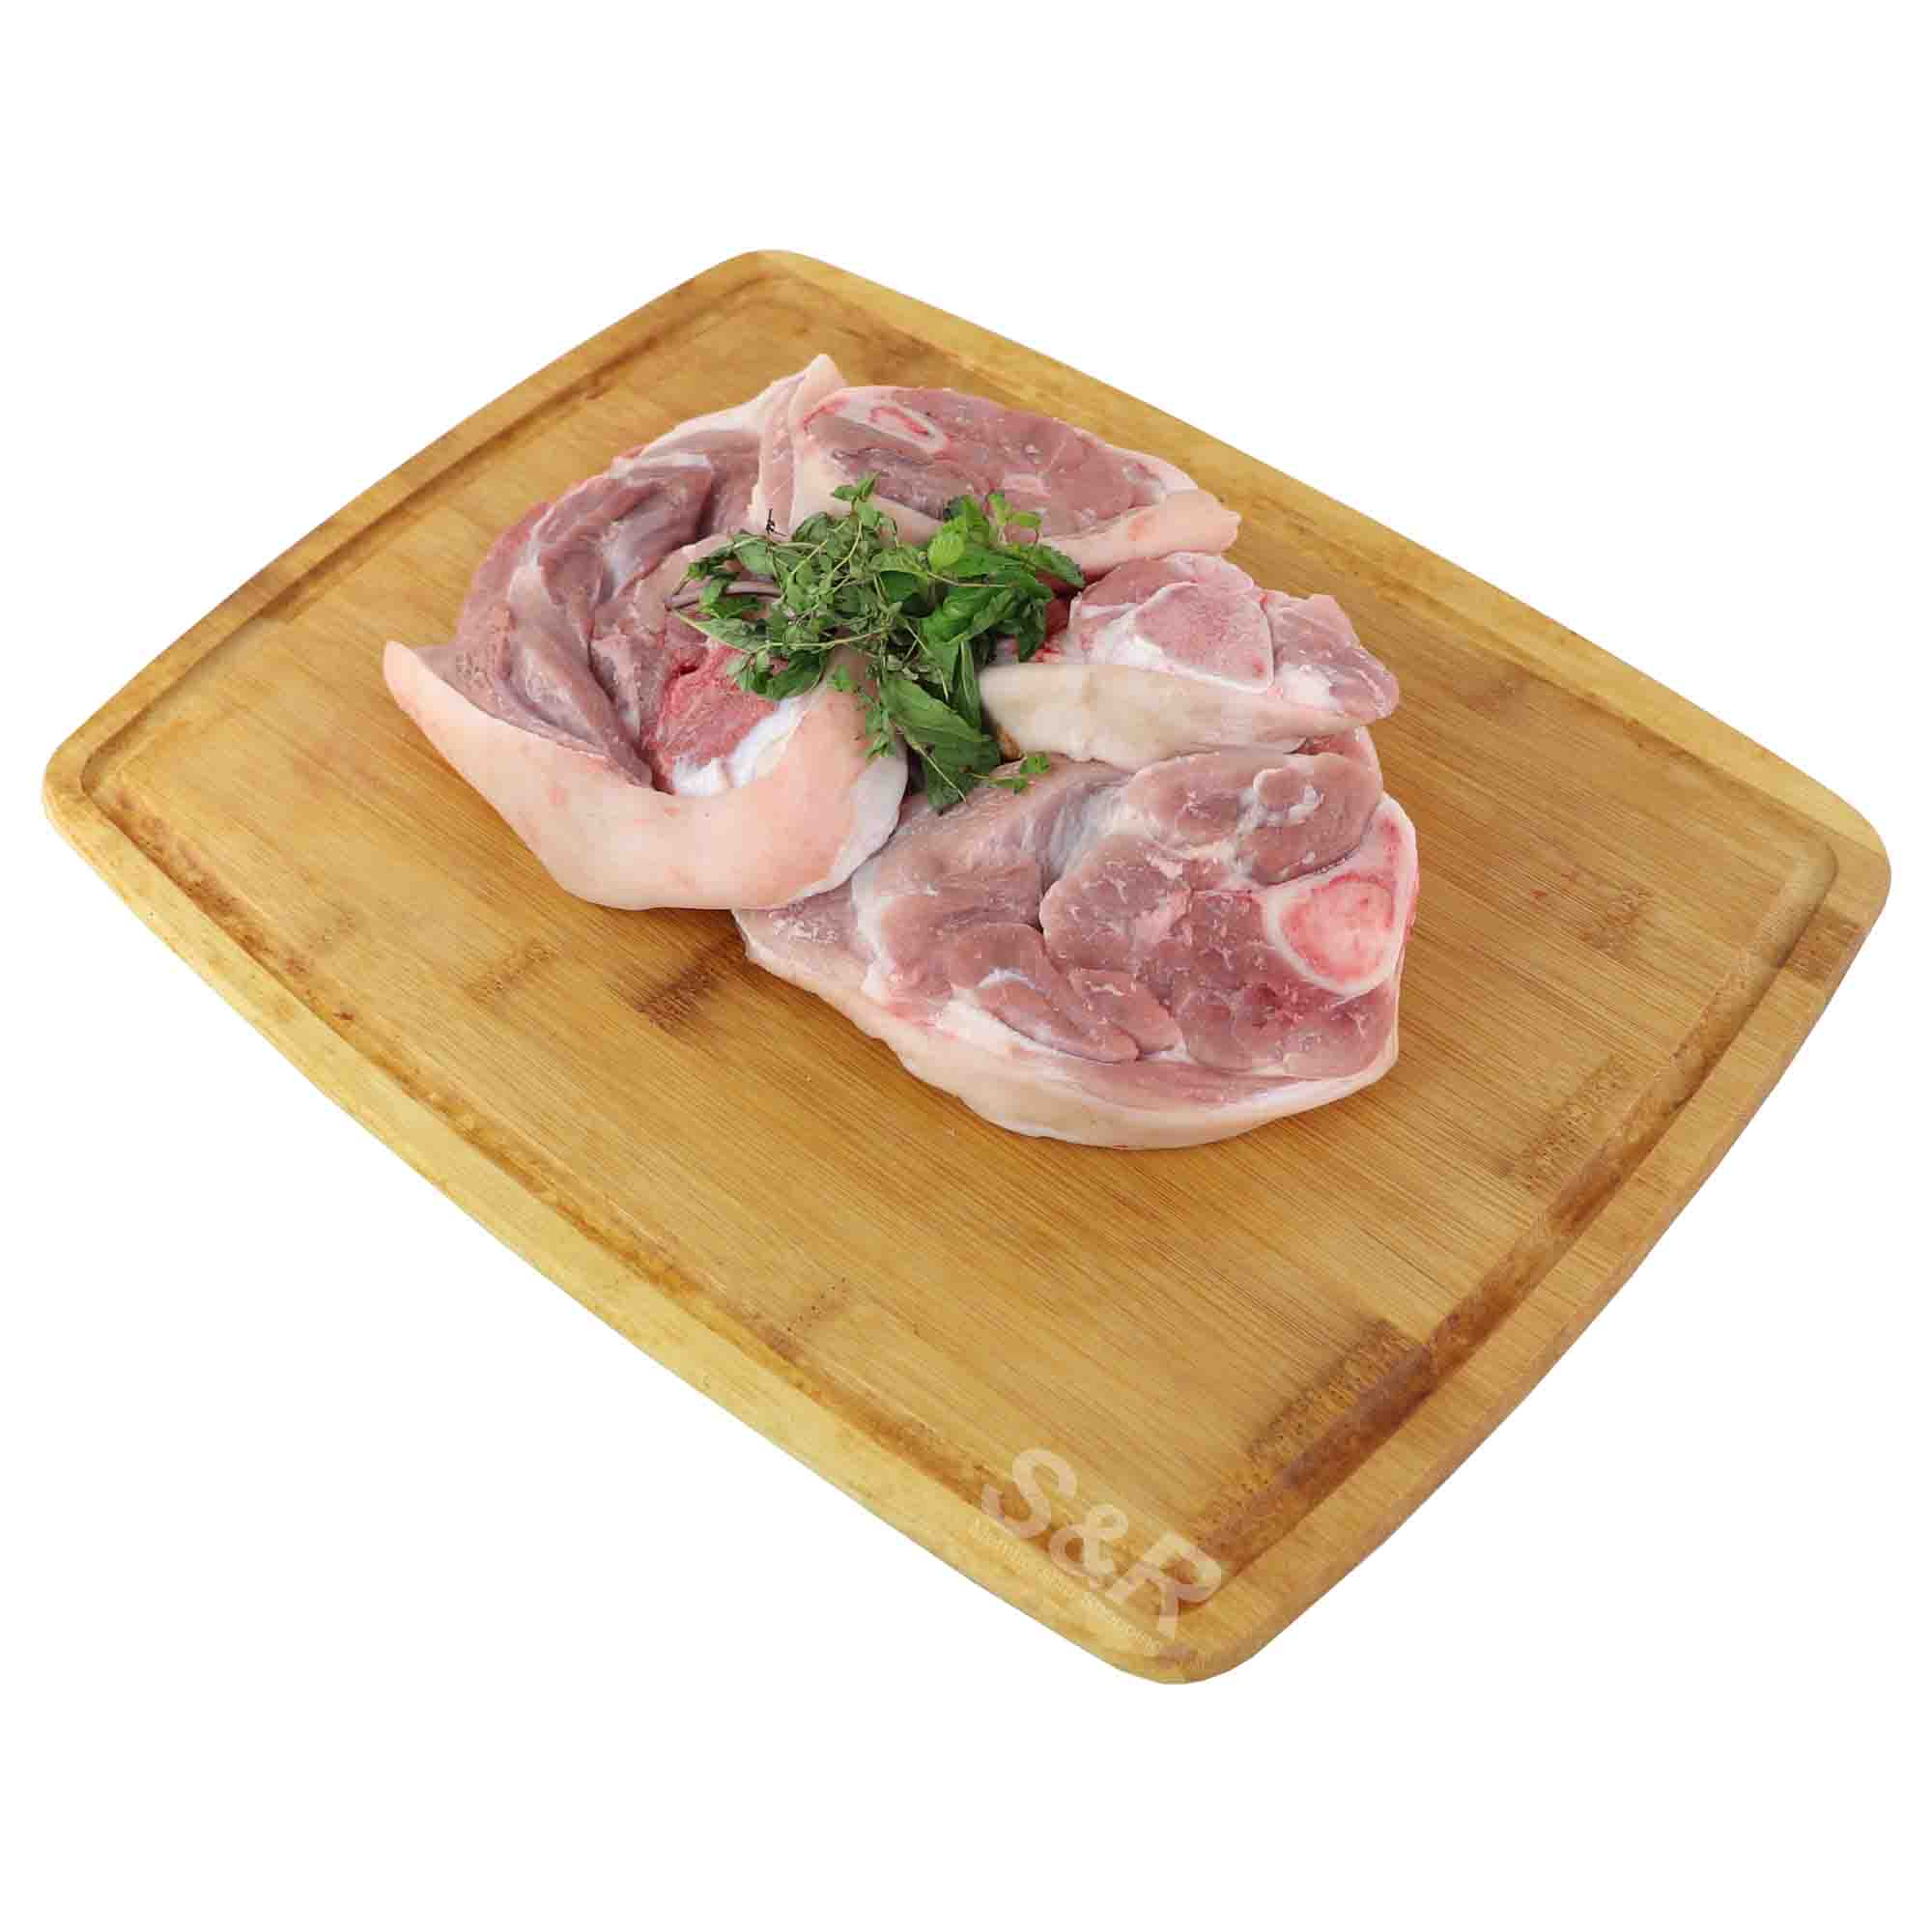 Members' Value Pork Pata Sliced approx. 1.7kg